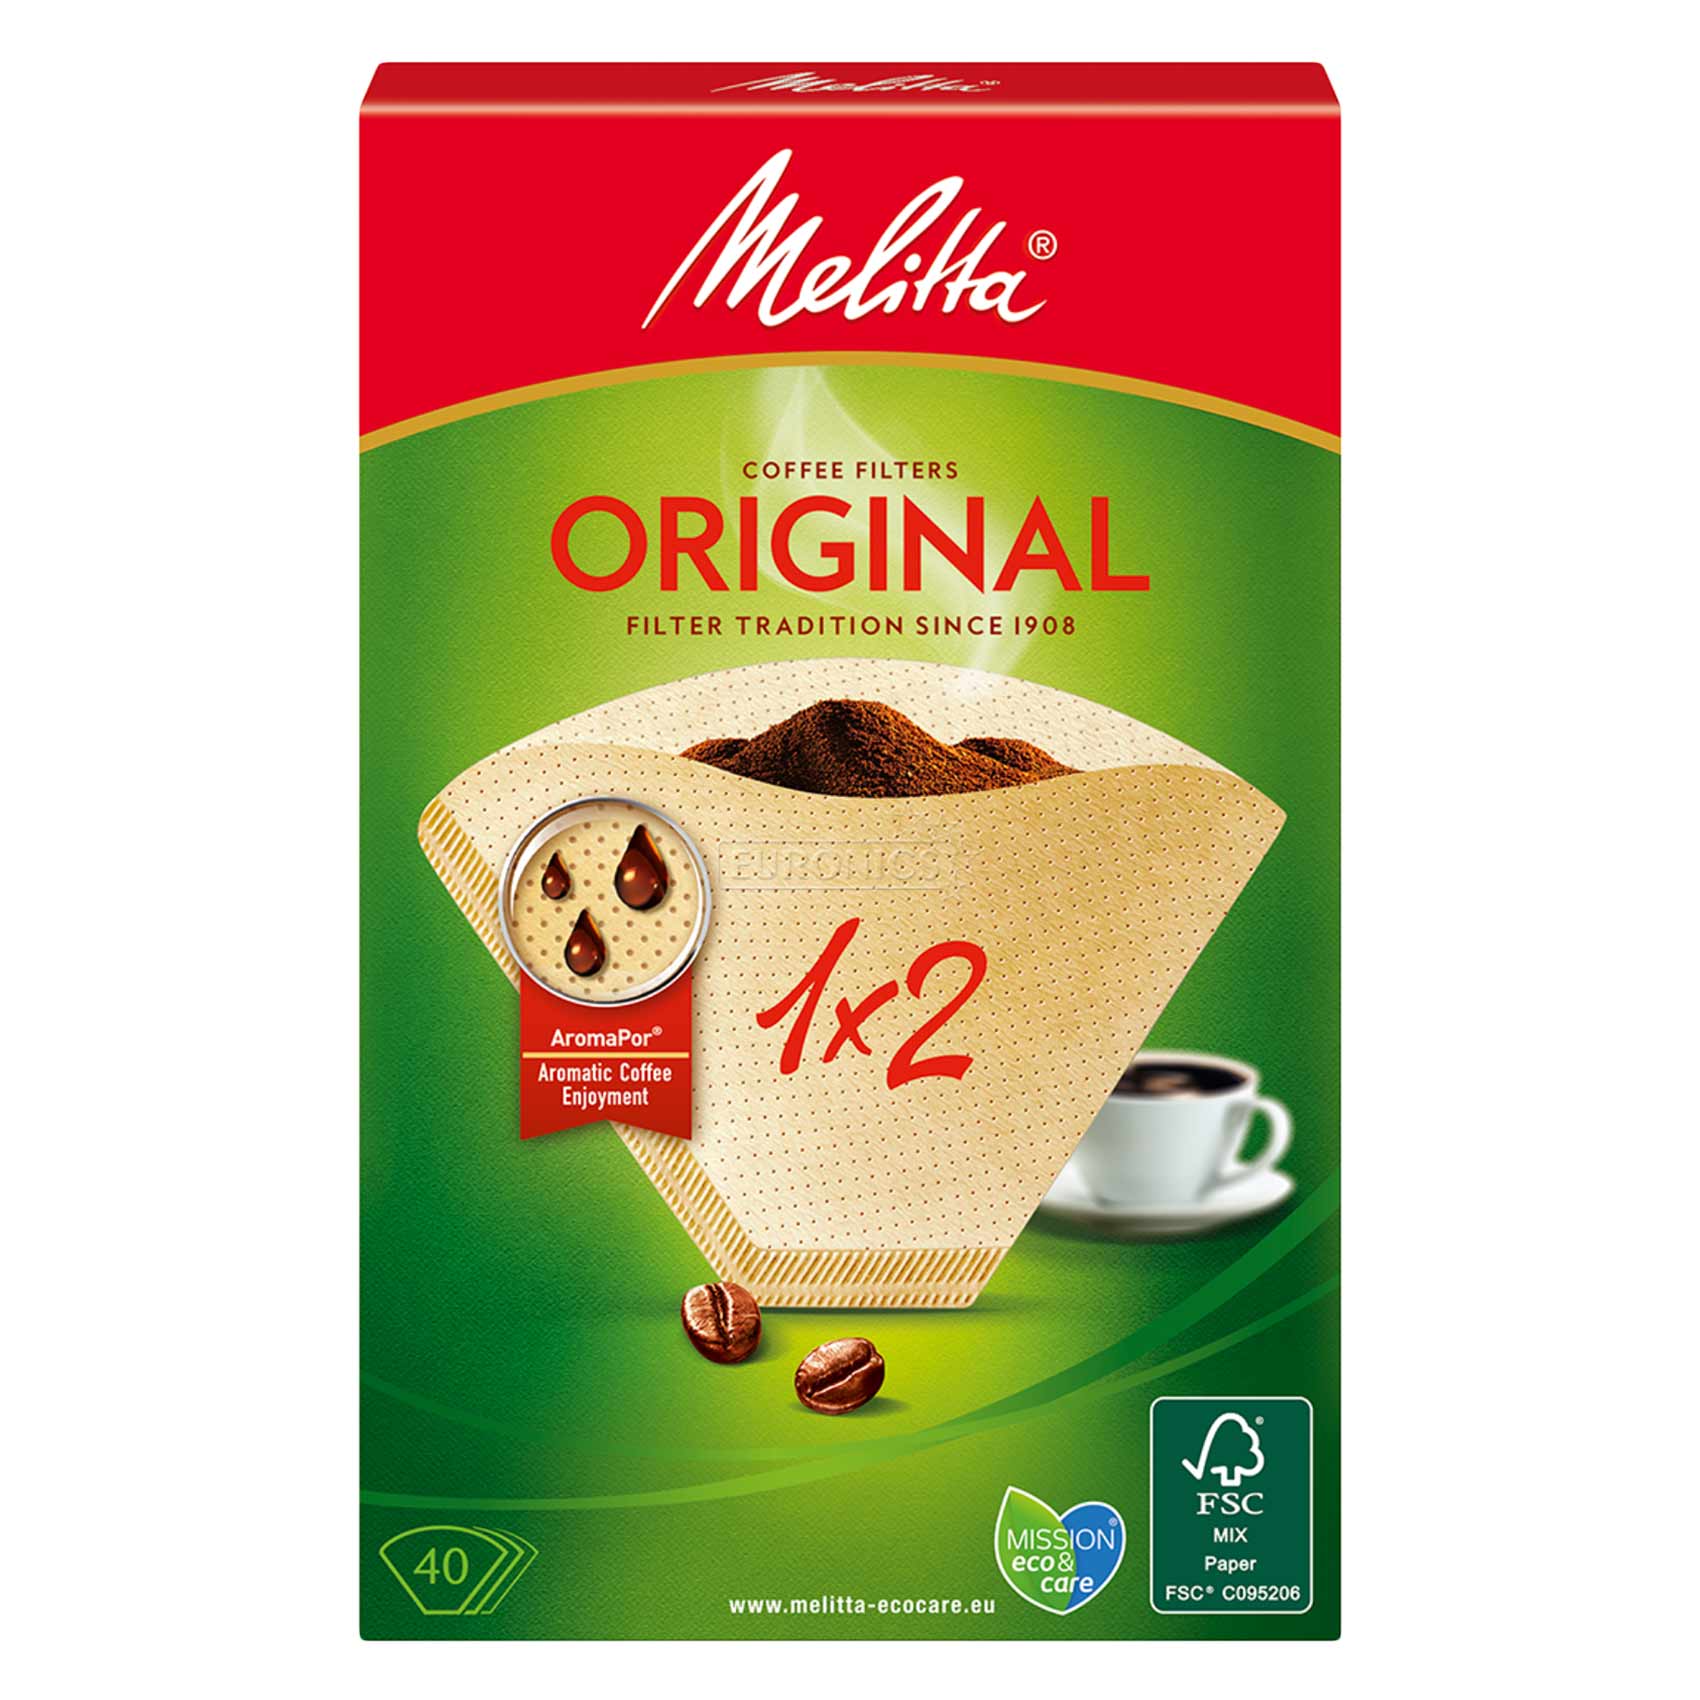 Melitta Original Filter Brown Coffee 40 Pieces